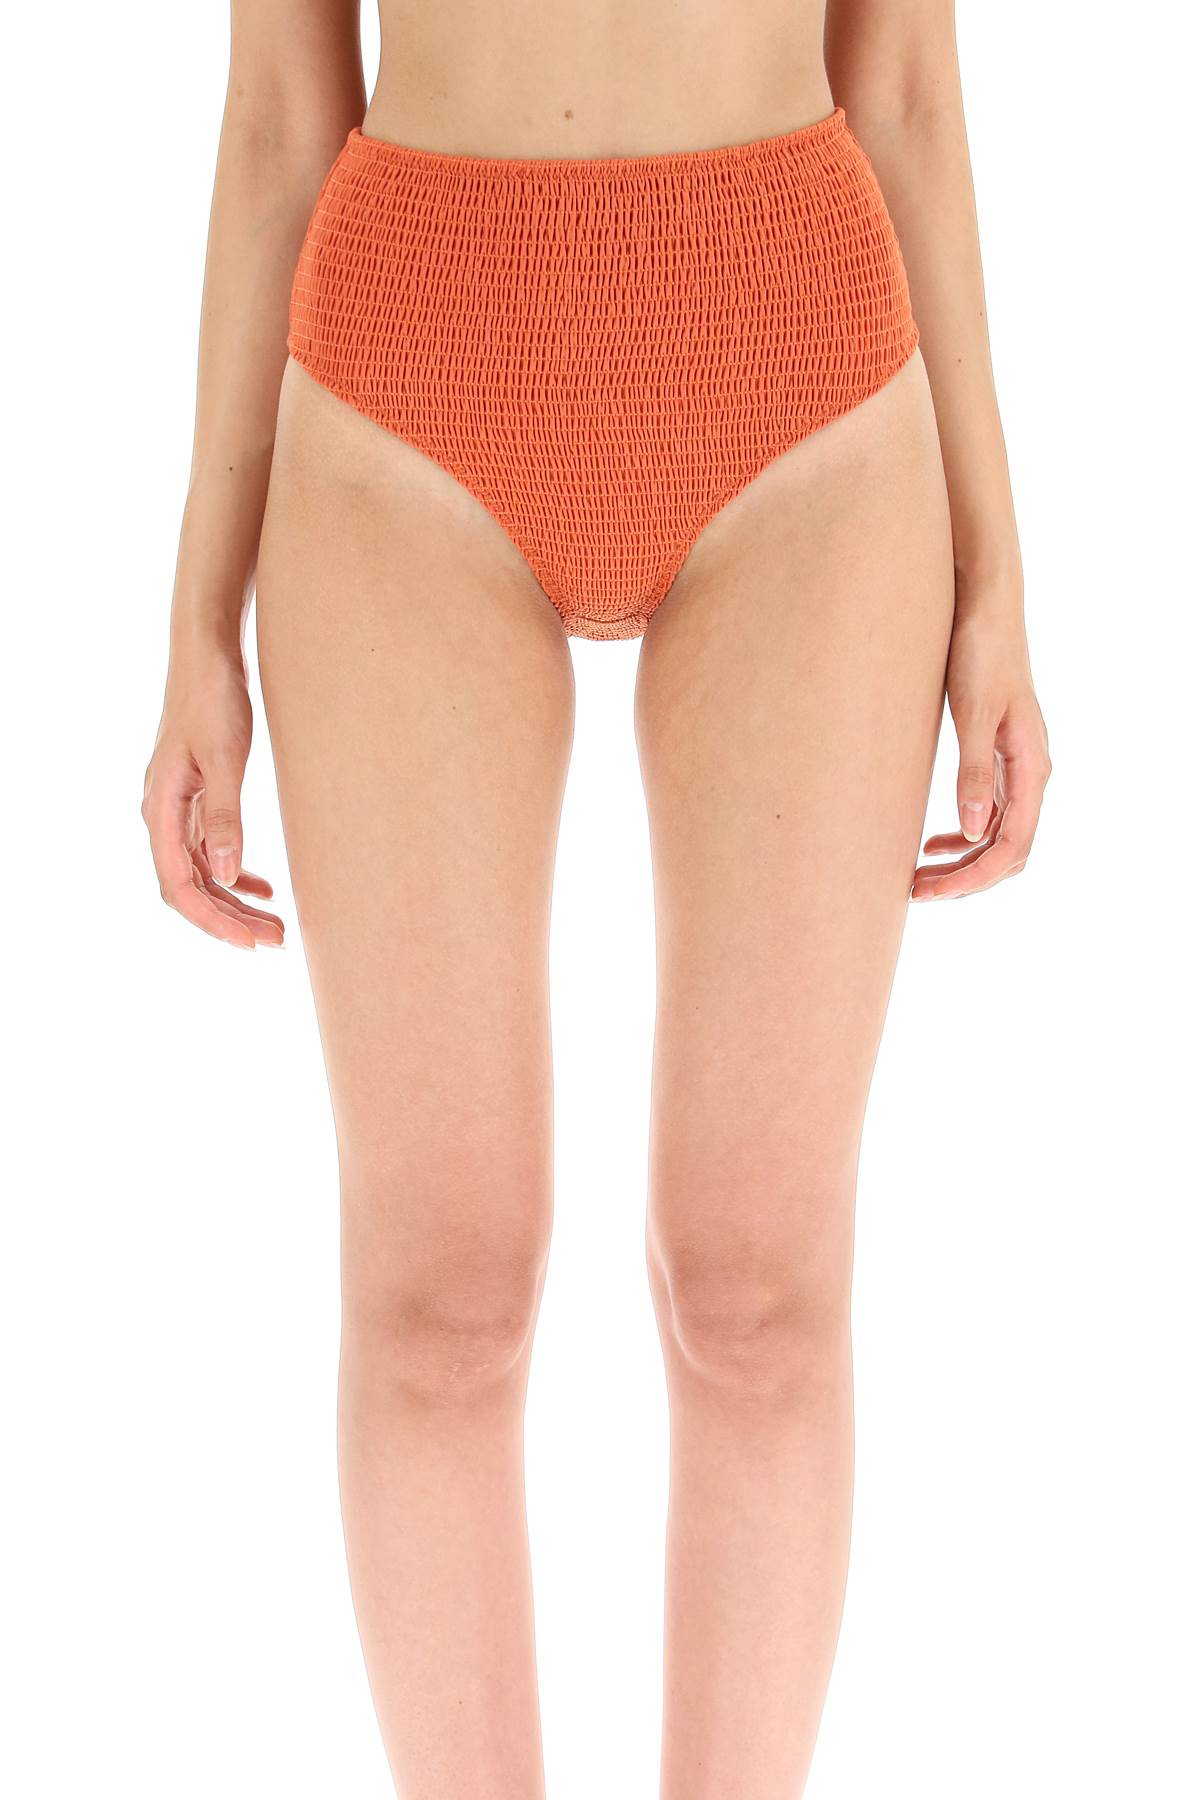 Toteme High Waisted Bikini Bottom   Orange